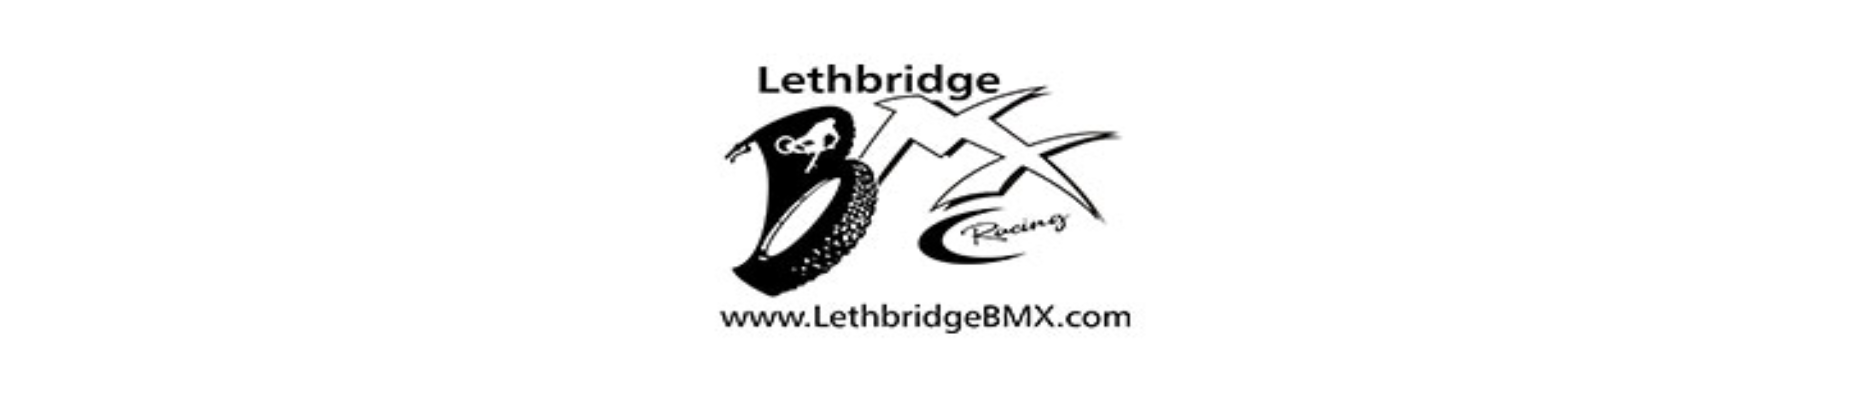 Lethbridge BMX